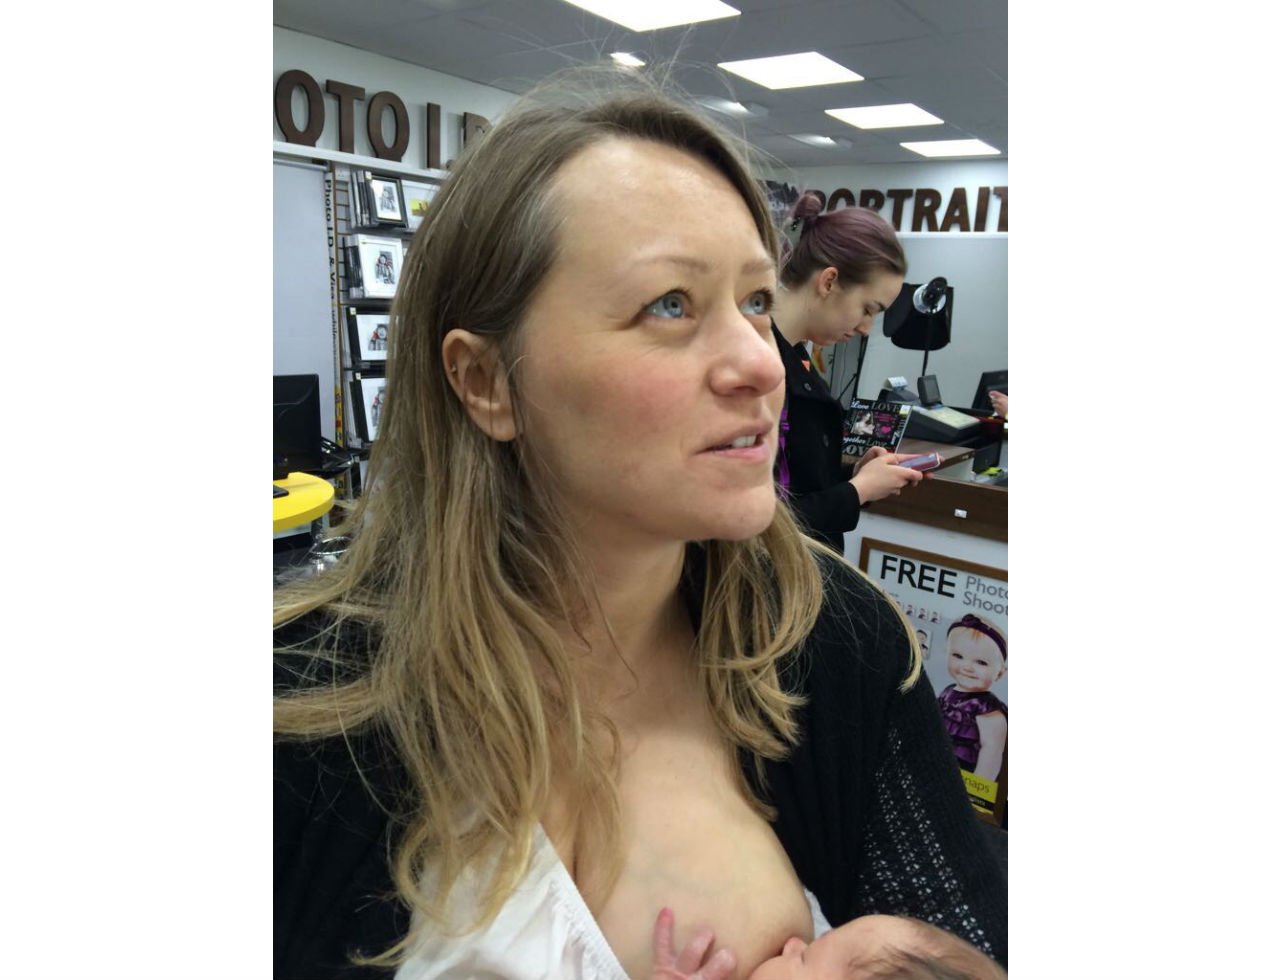 Mother breastfeeding her baby in public